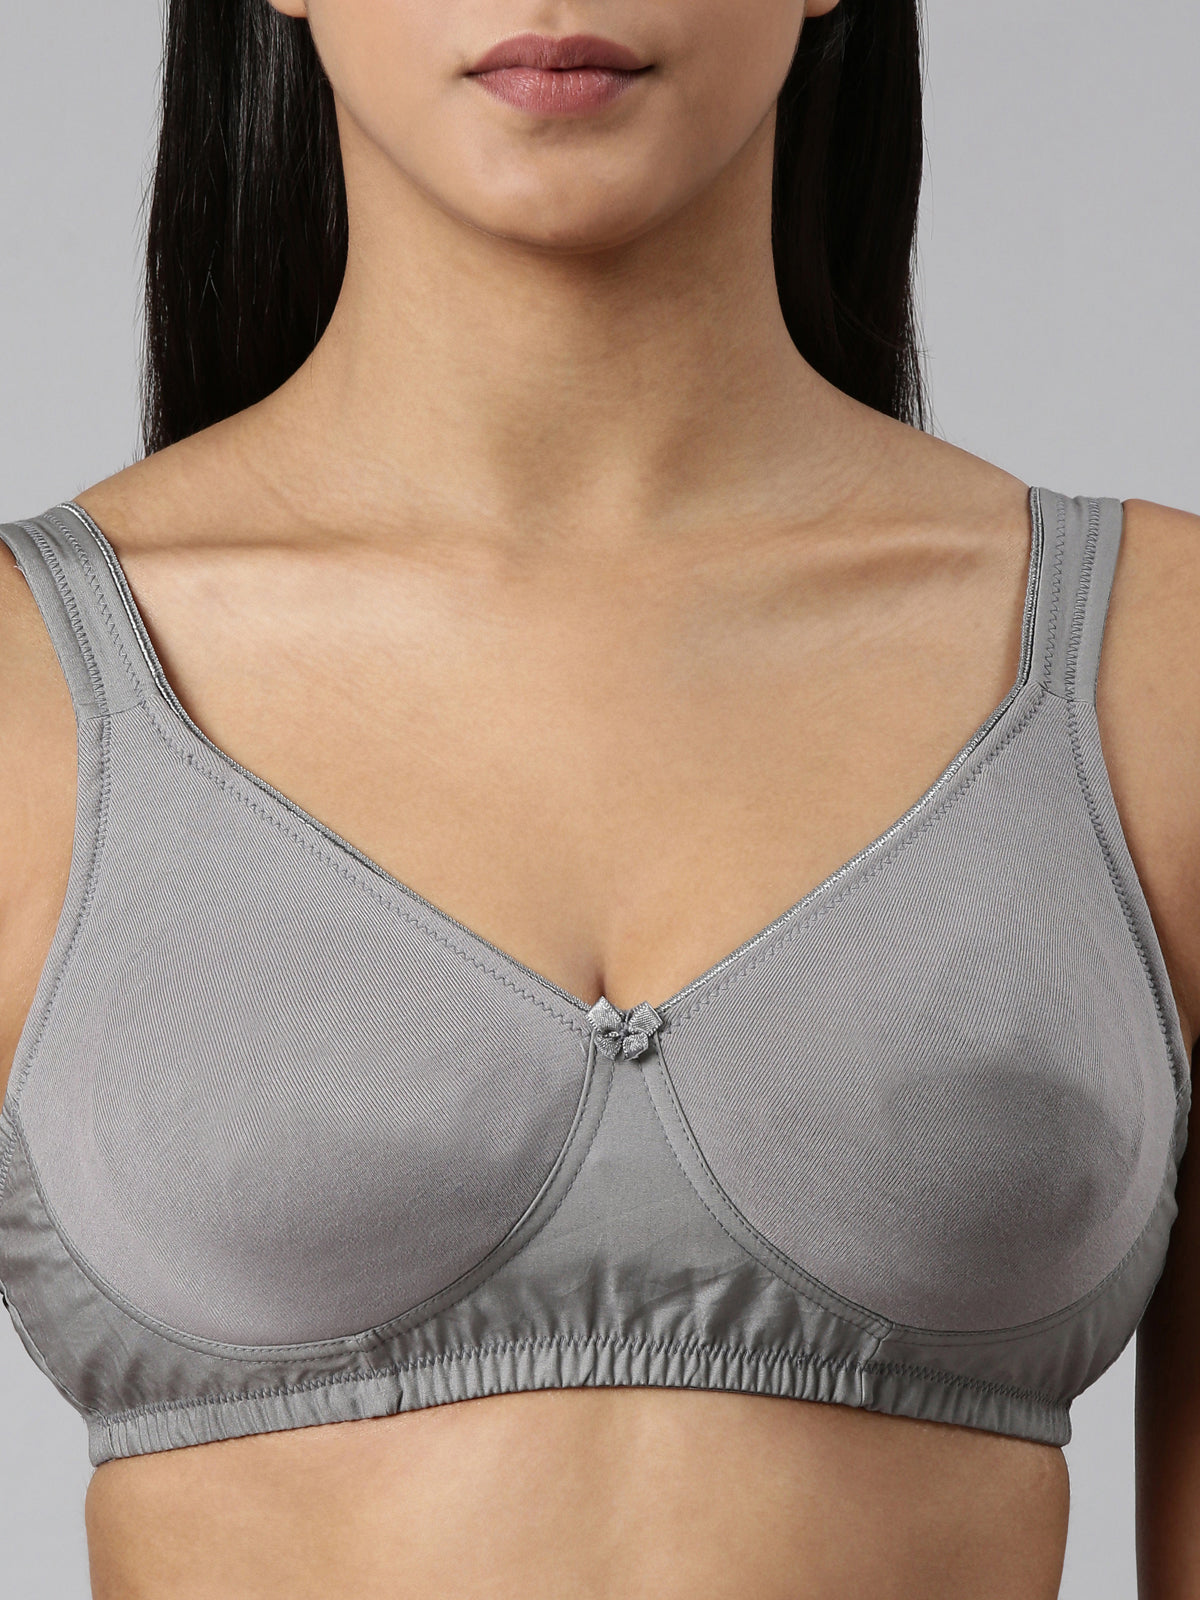 blossom-circlet-dark grey2-woven knitted-support bra